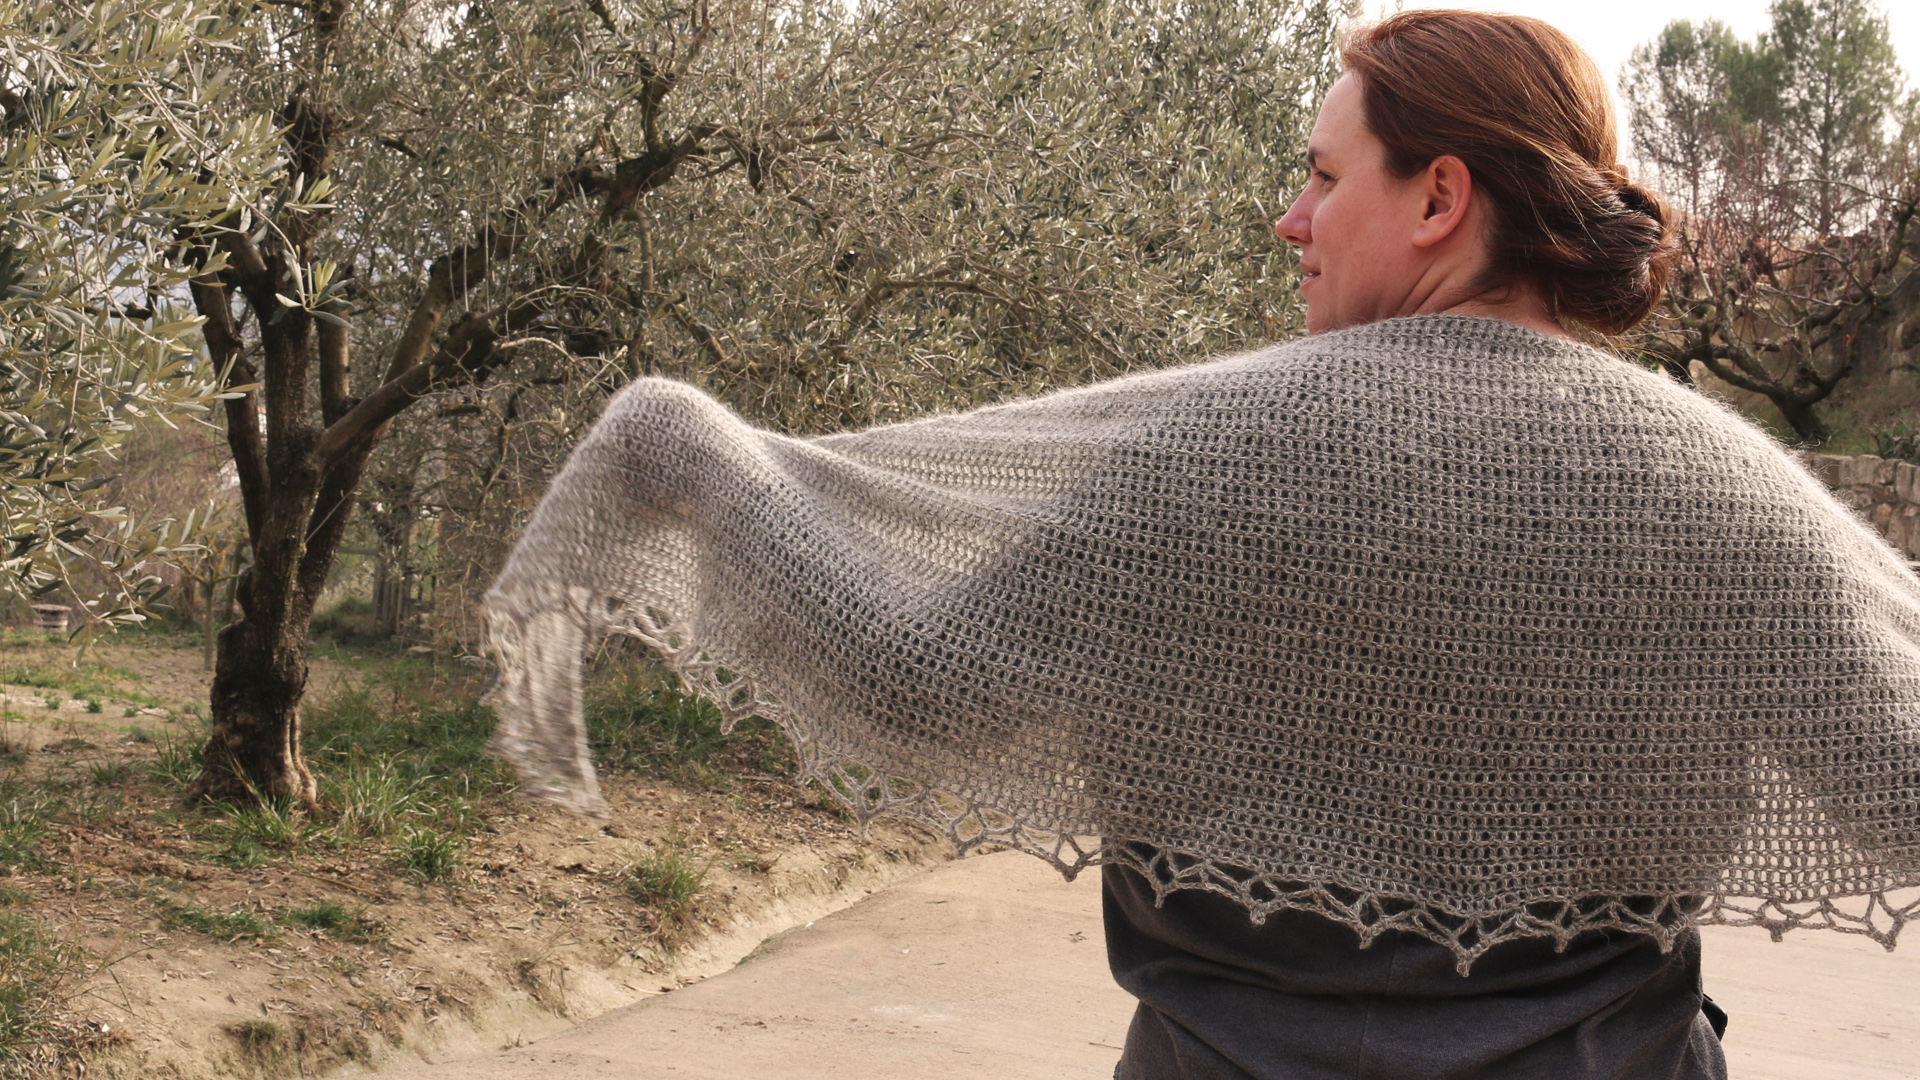 crochet shawl pattern london bridge pattern chal calado lace